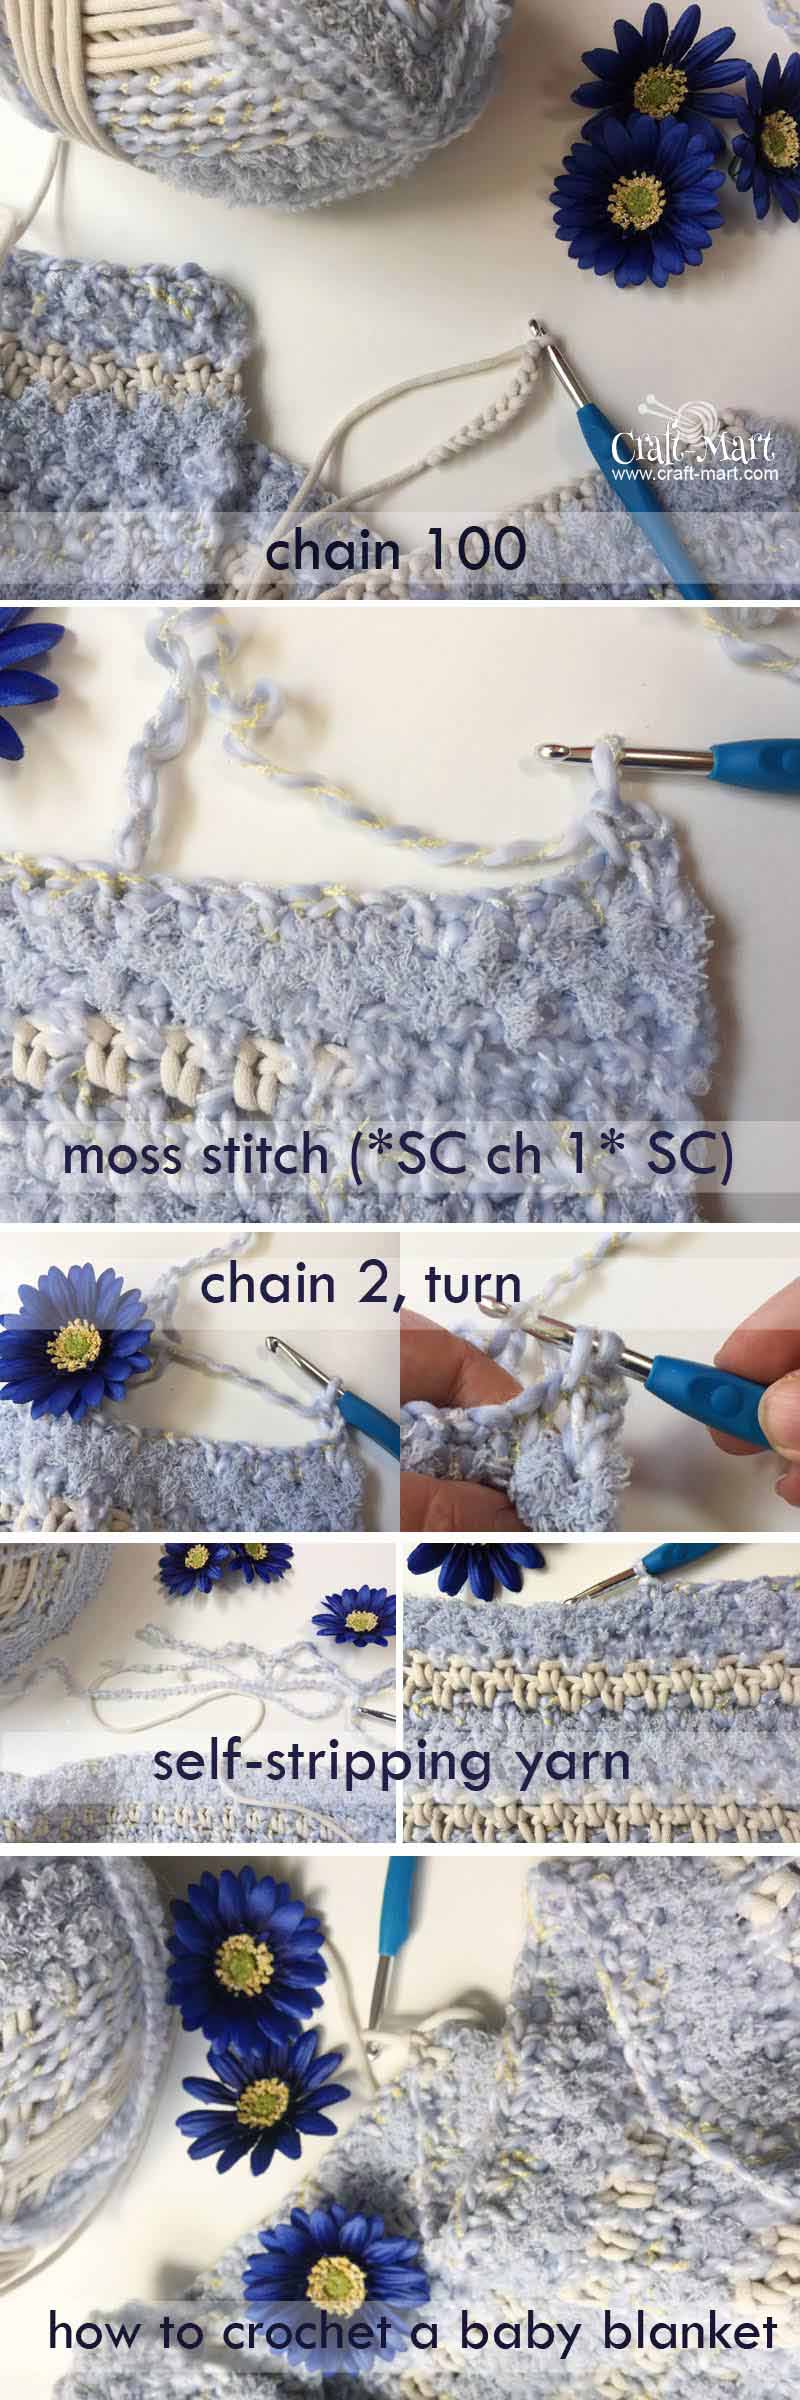 how to crochet a baby blanket easy crochet pattern for beginners #crochetbabyblanket #freecrochetpattern #easybabyblanketcrochetpattern